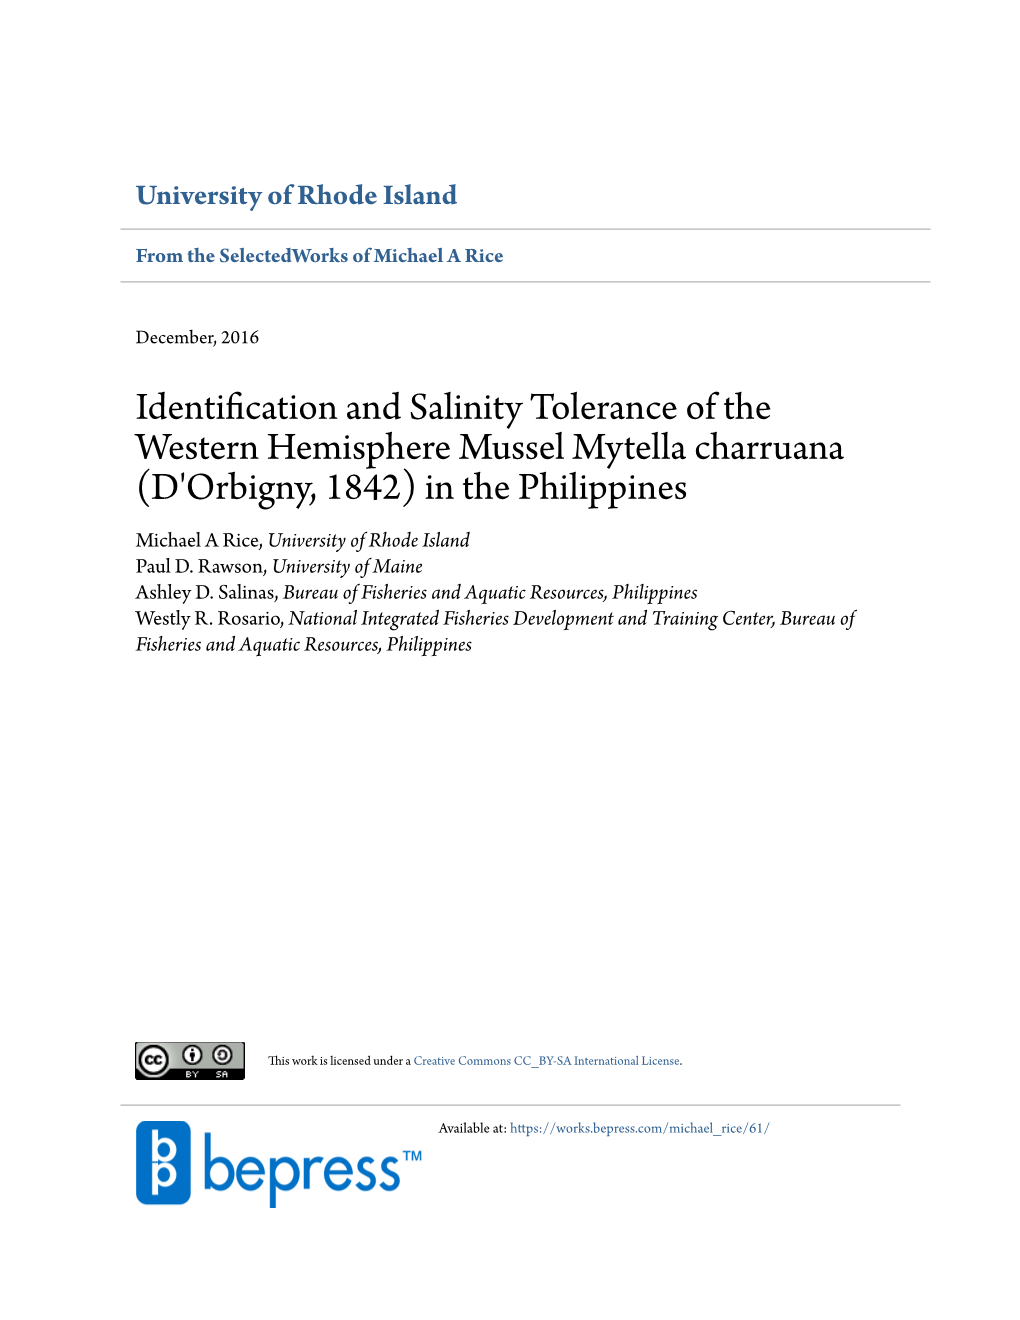 Identification and Salinity Tolerance of the Western Hemisphere Mussel Mytella Charruana (D'orbigny, 1842) in the Philippine